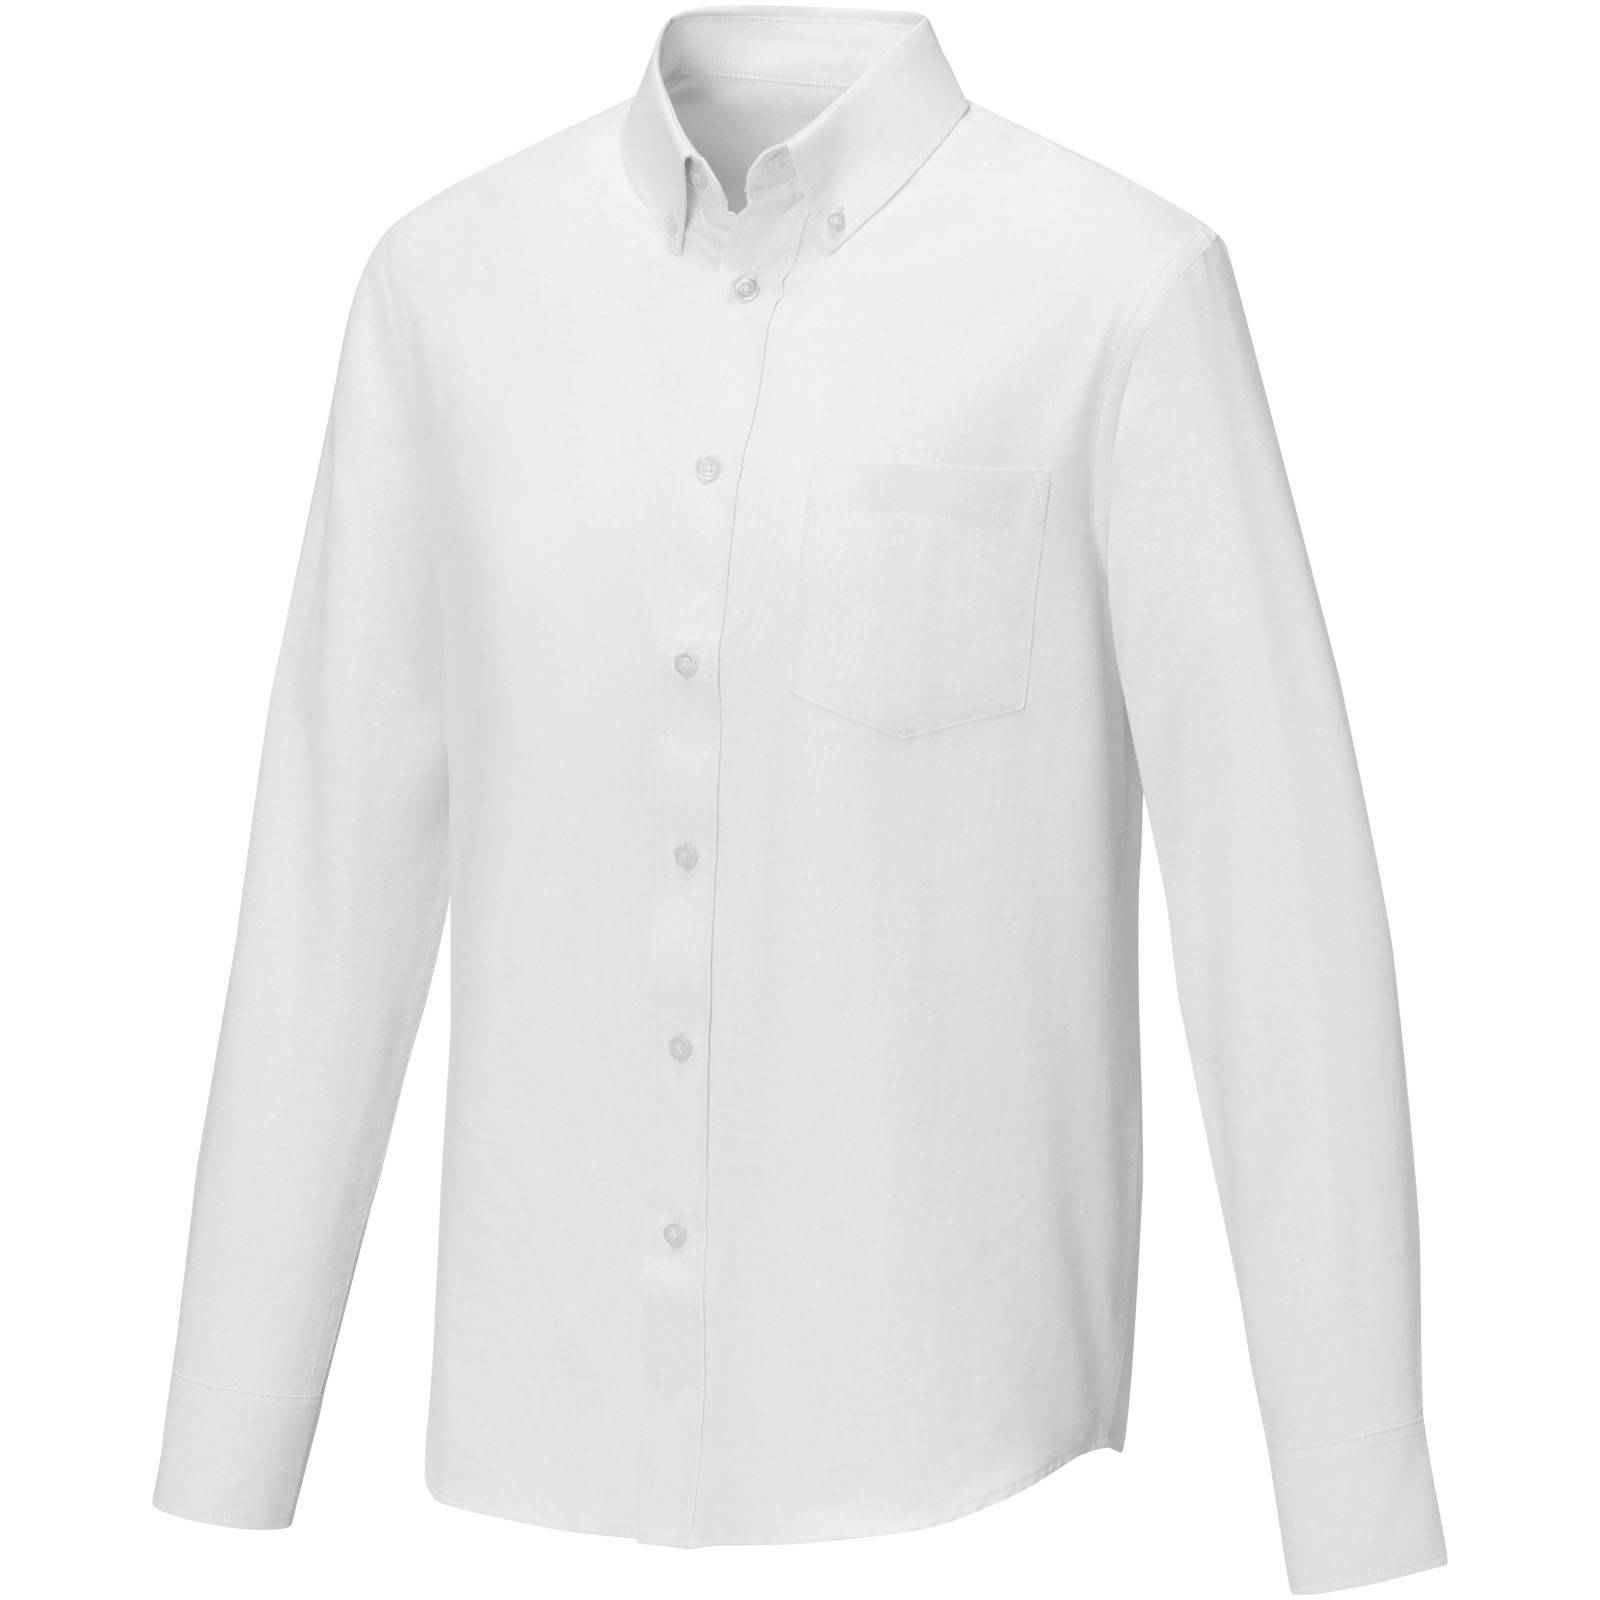 Shirts - Pollux long sleeve men's shirt